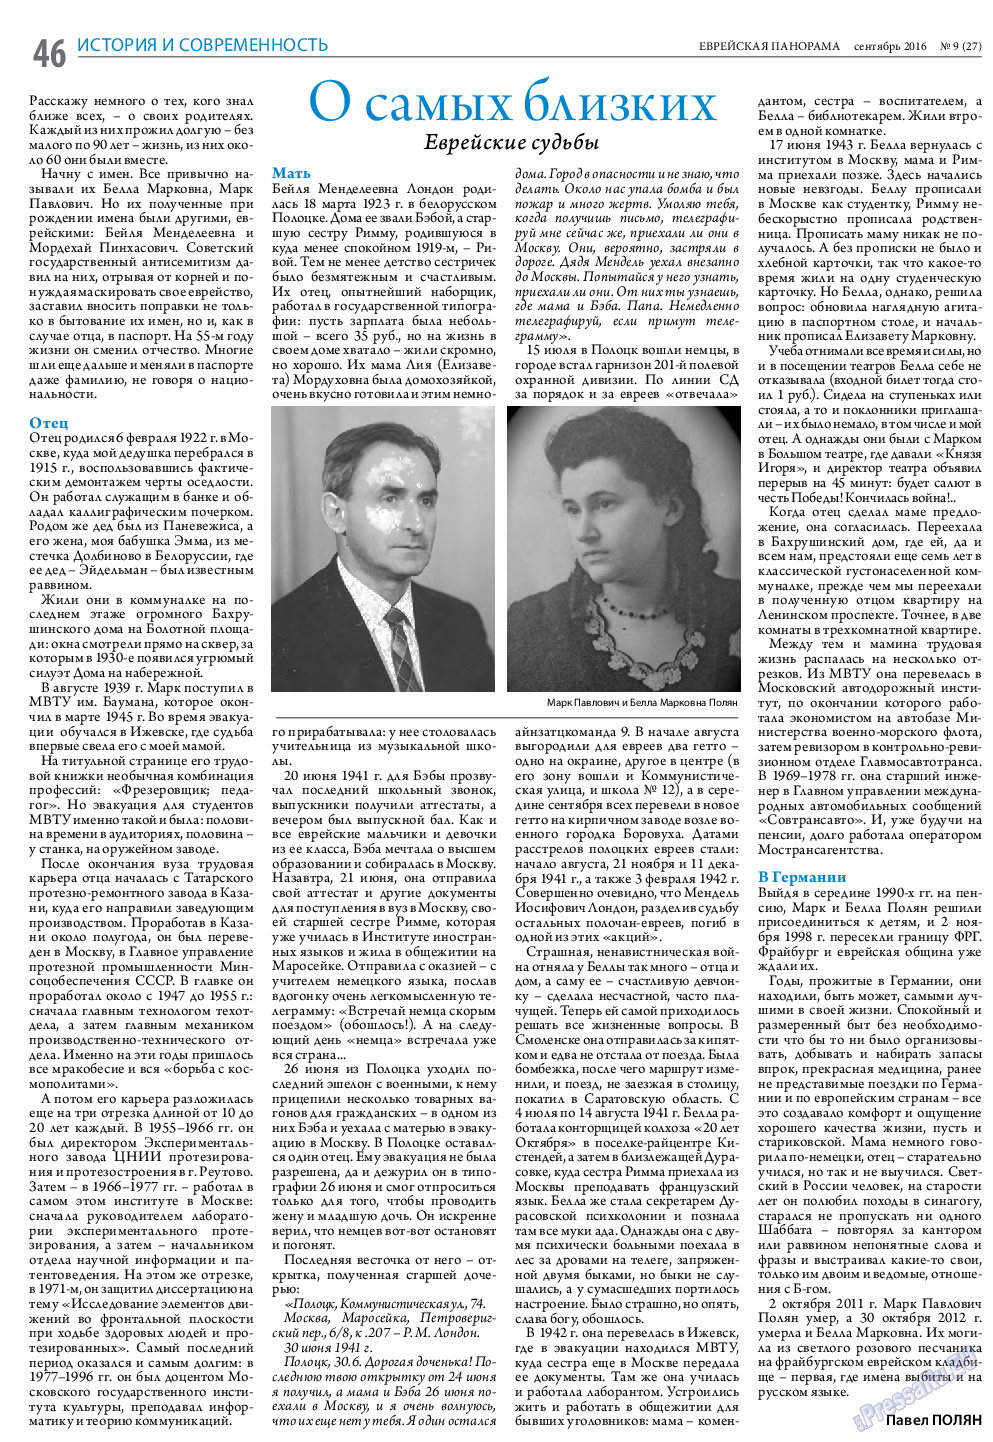 Еврейская панорама, газета. 2016 №9 стр.46